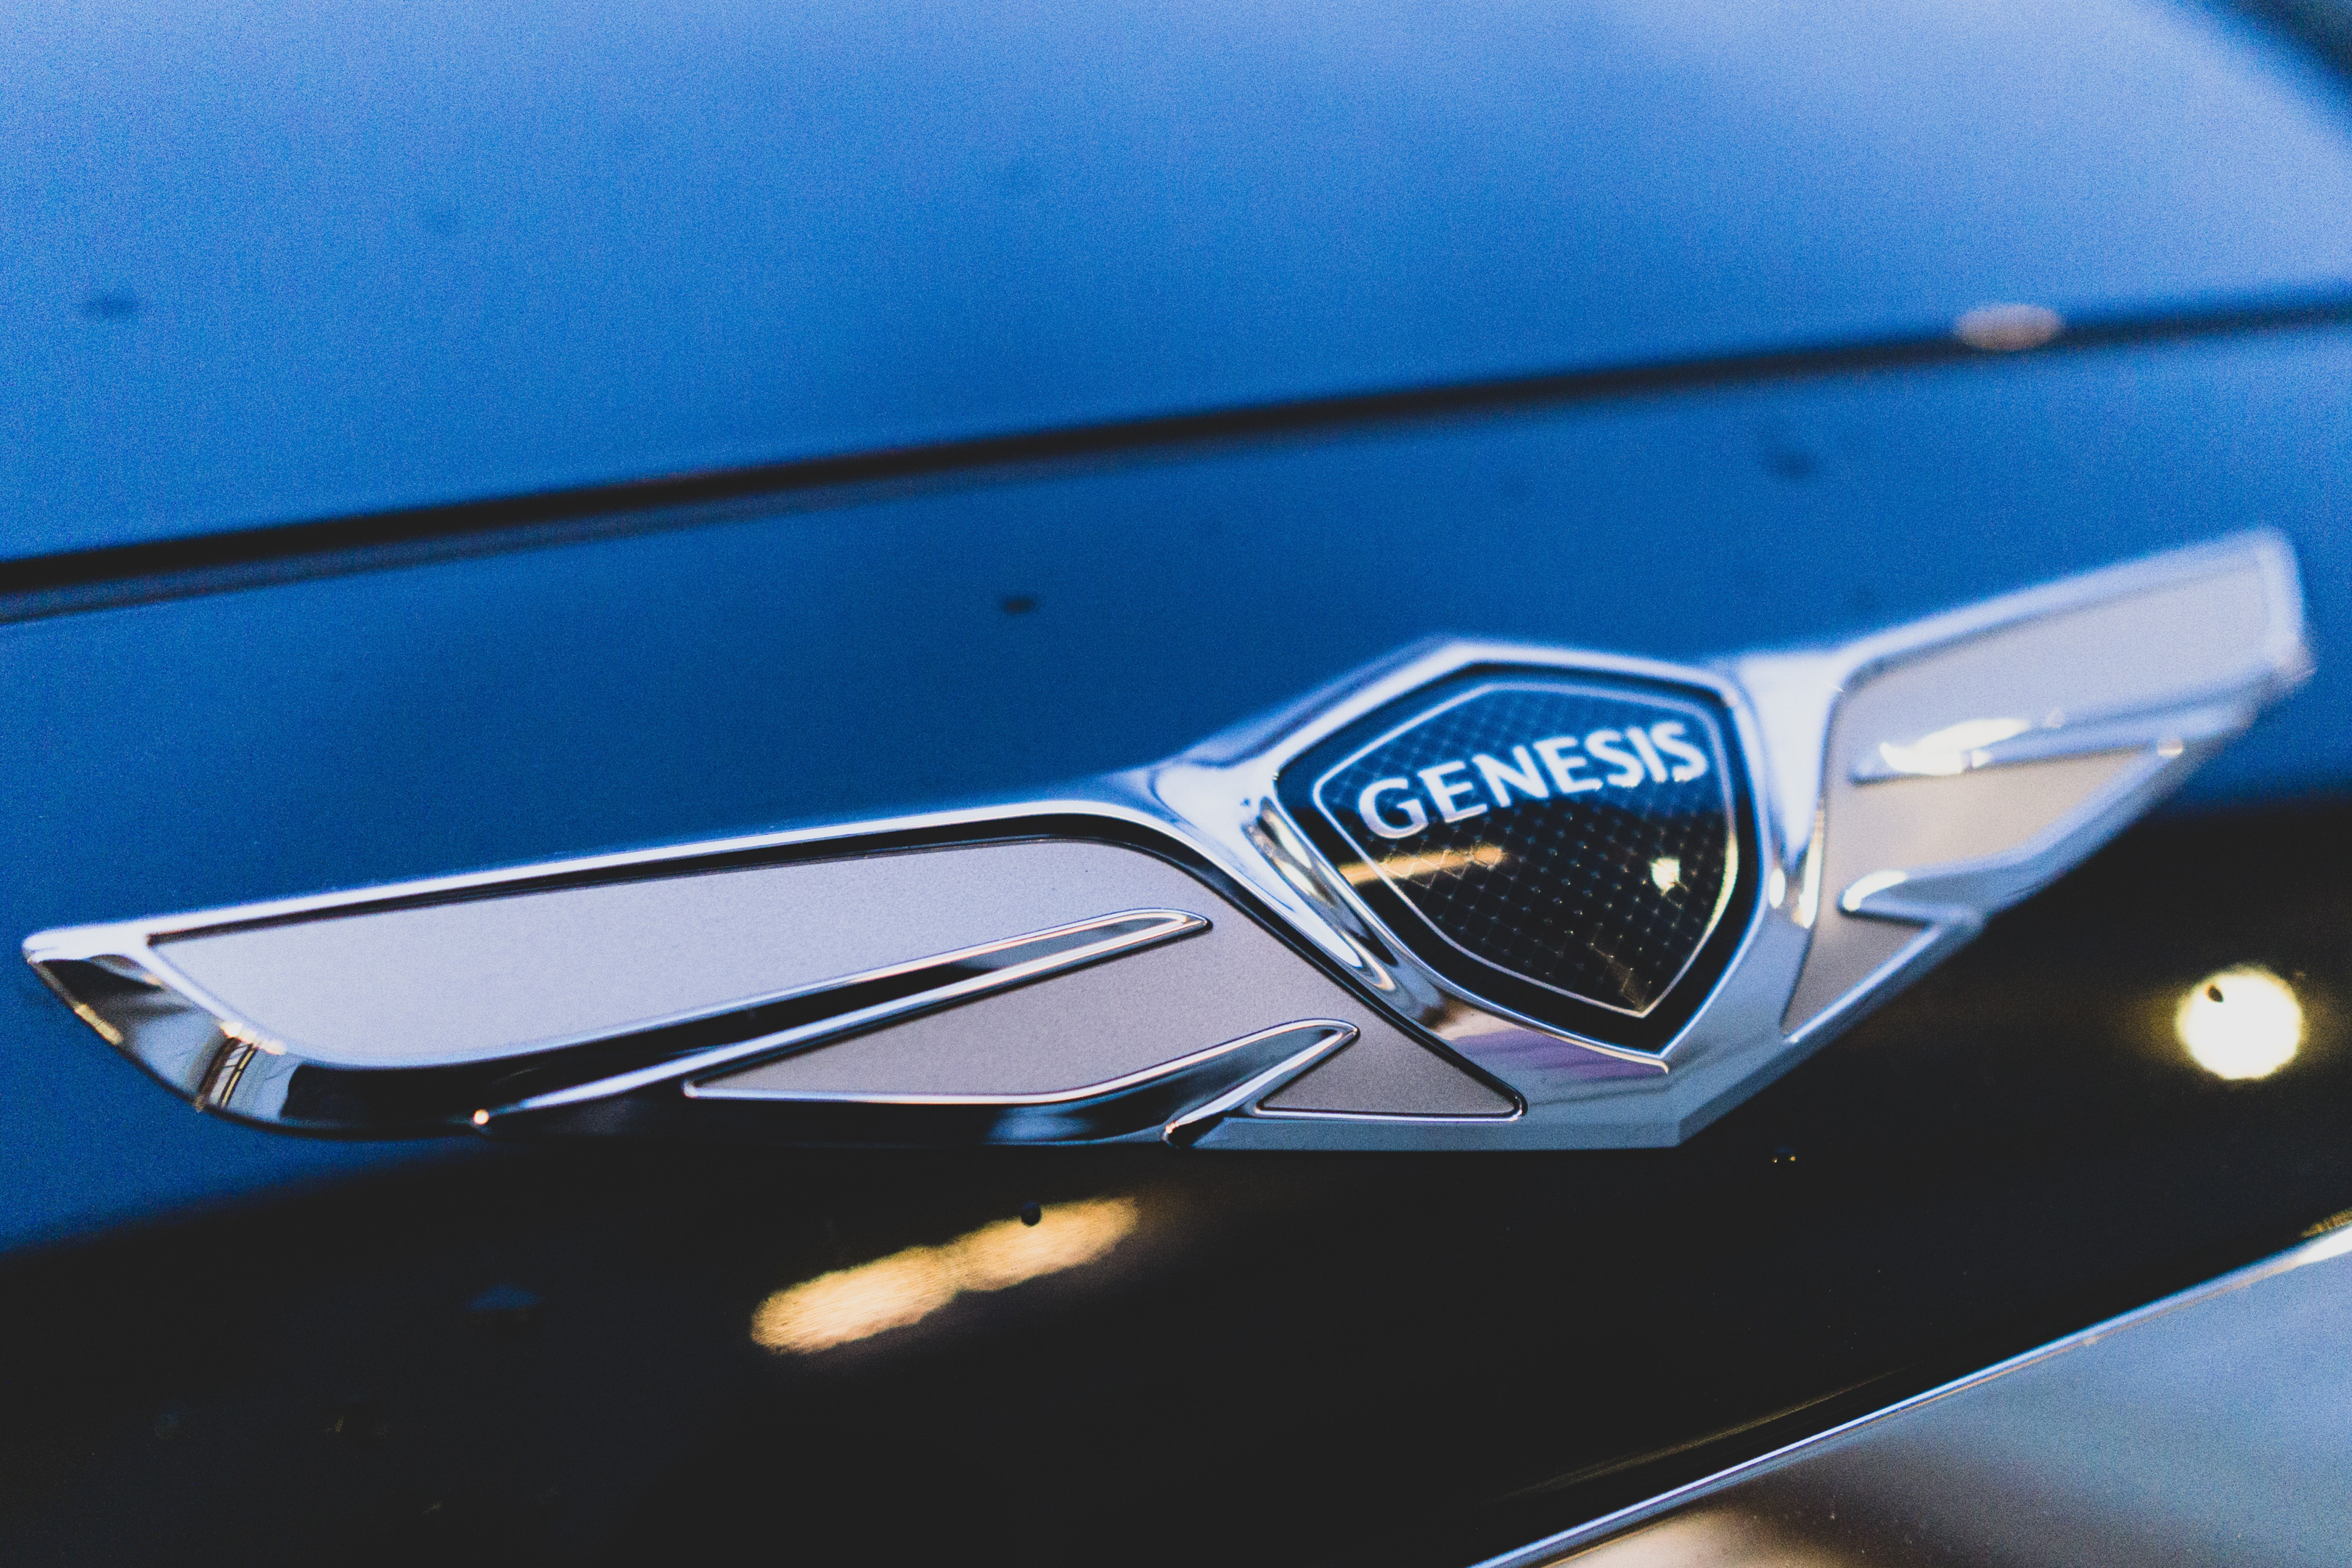 The Genesis Brand